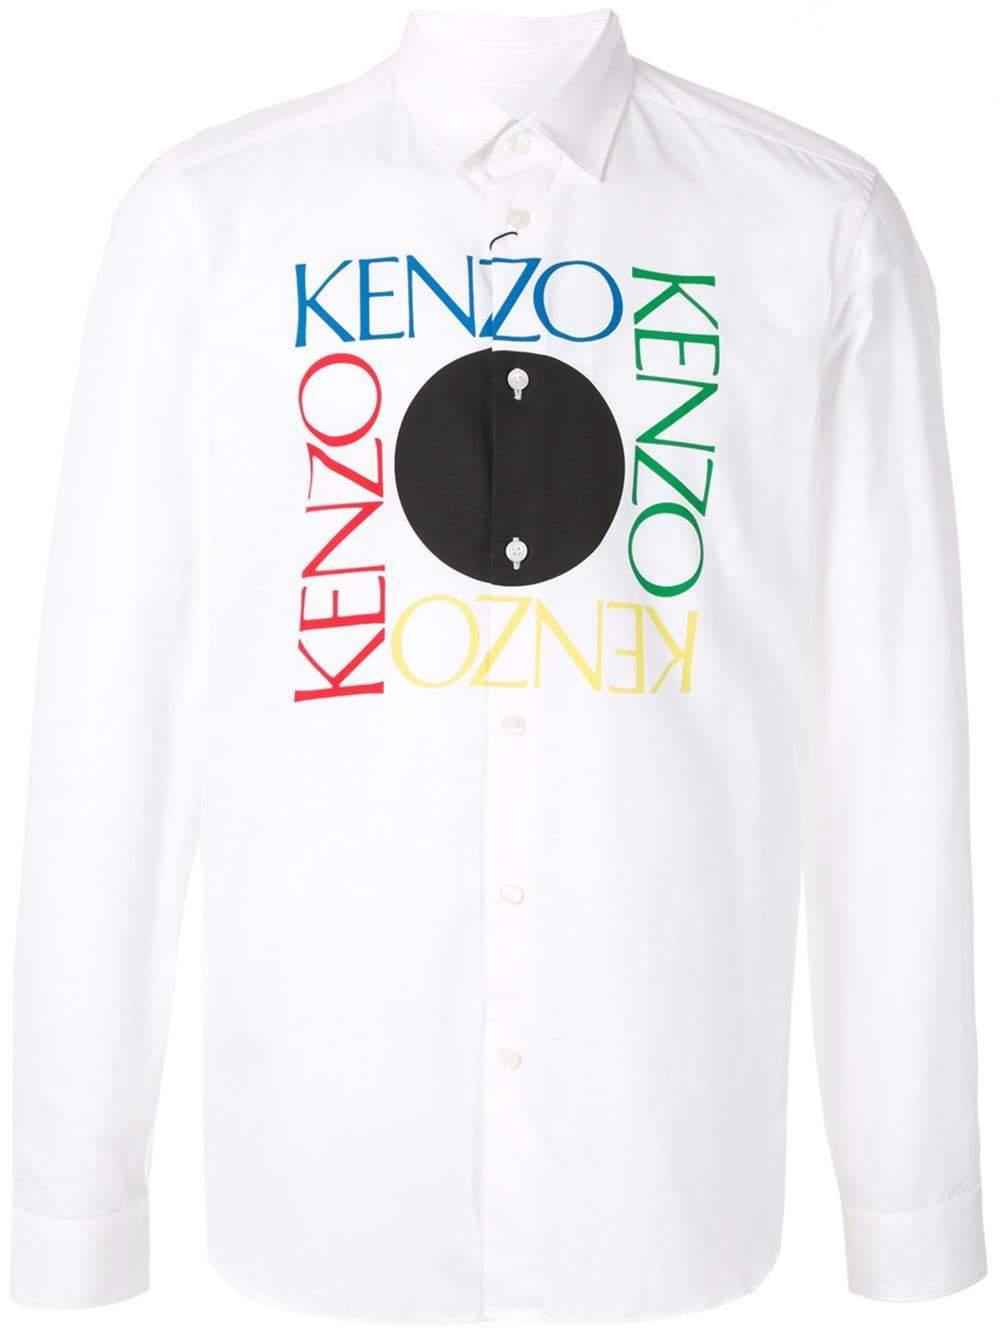 kenzo square logo t shirt